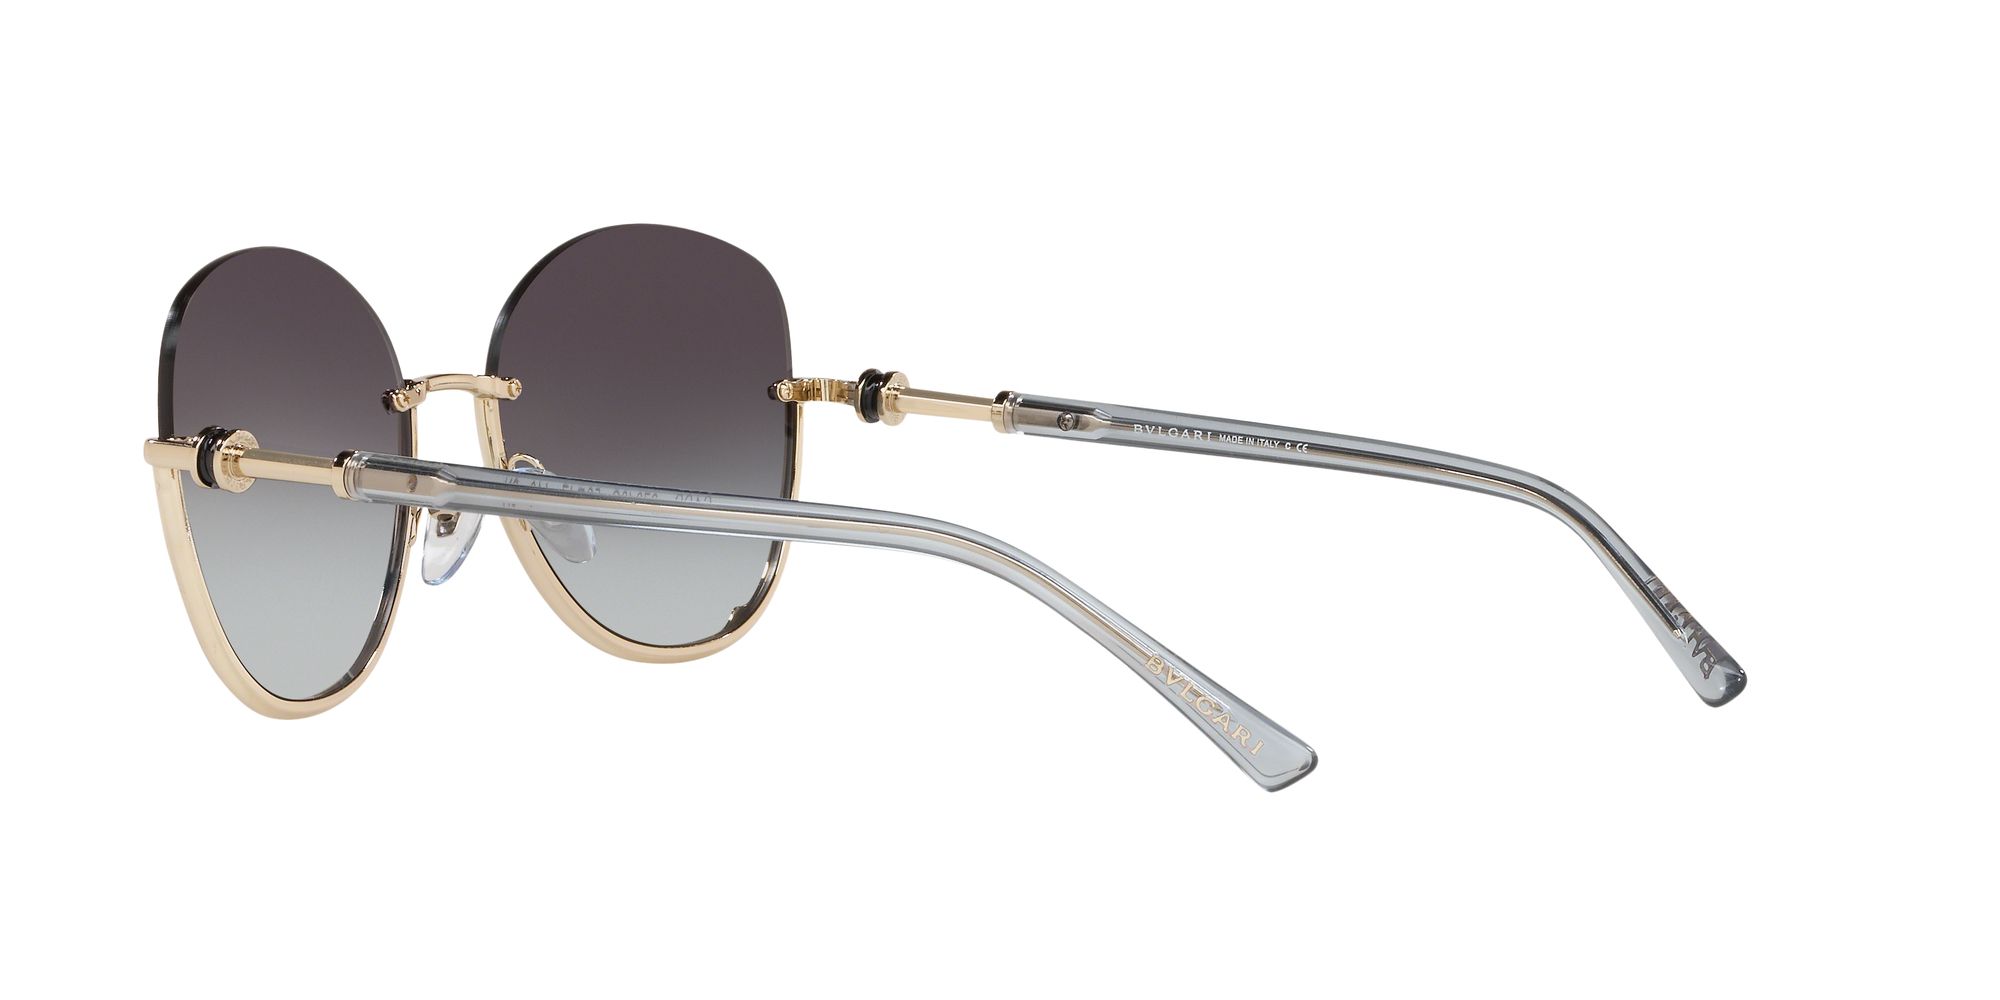 BVLGARI BV6123 Women's Butterfly Sunglasses, Gold/Grey Gradient at John Lewis & Partners